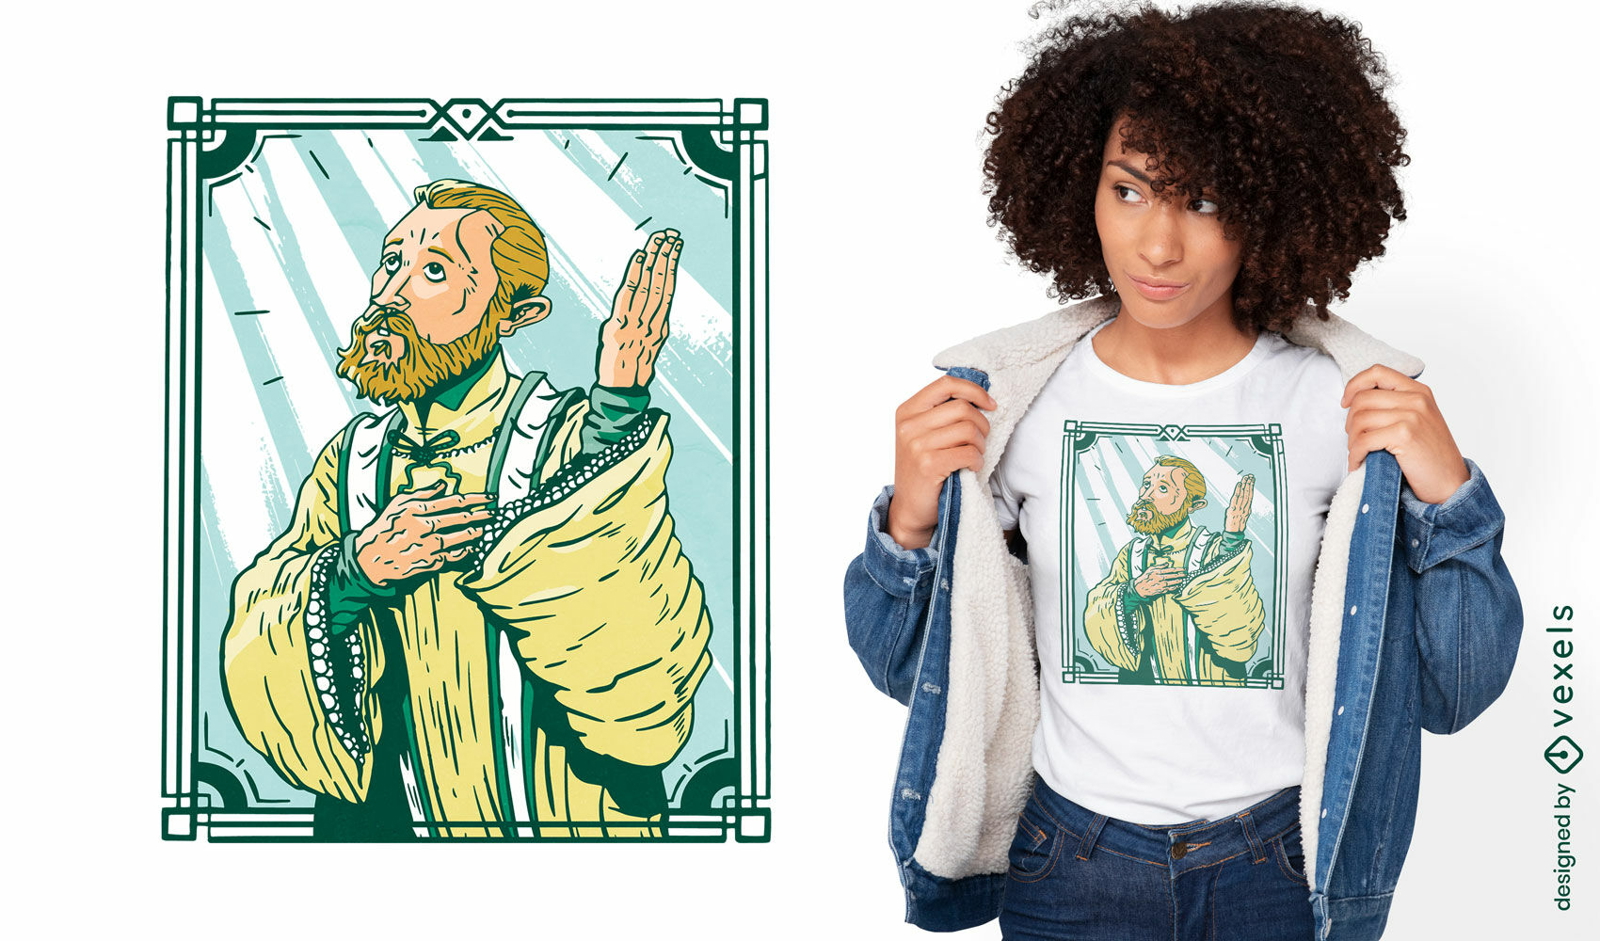 Priester, der Portr?t-T-Shirt-Design betet